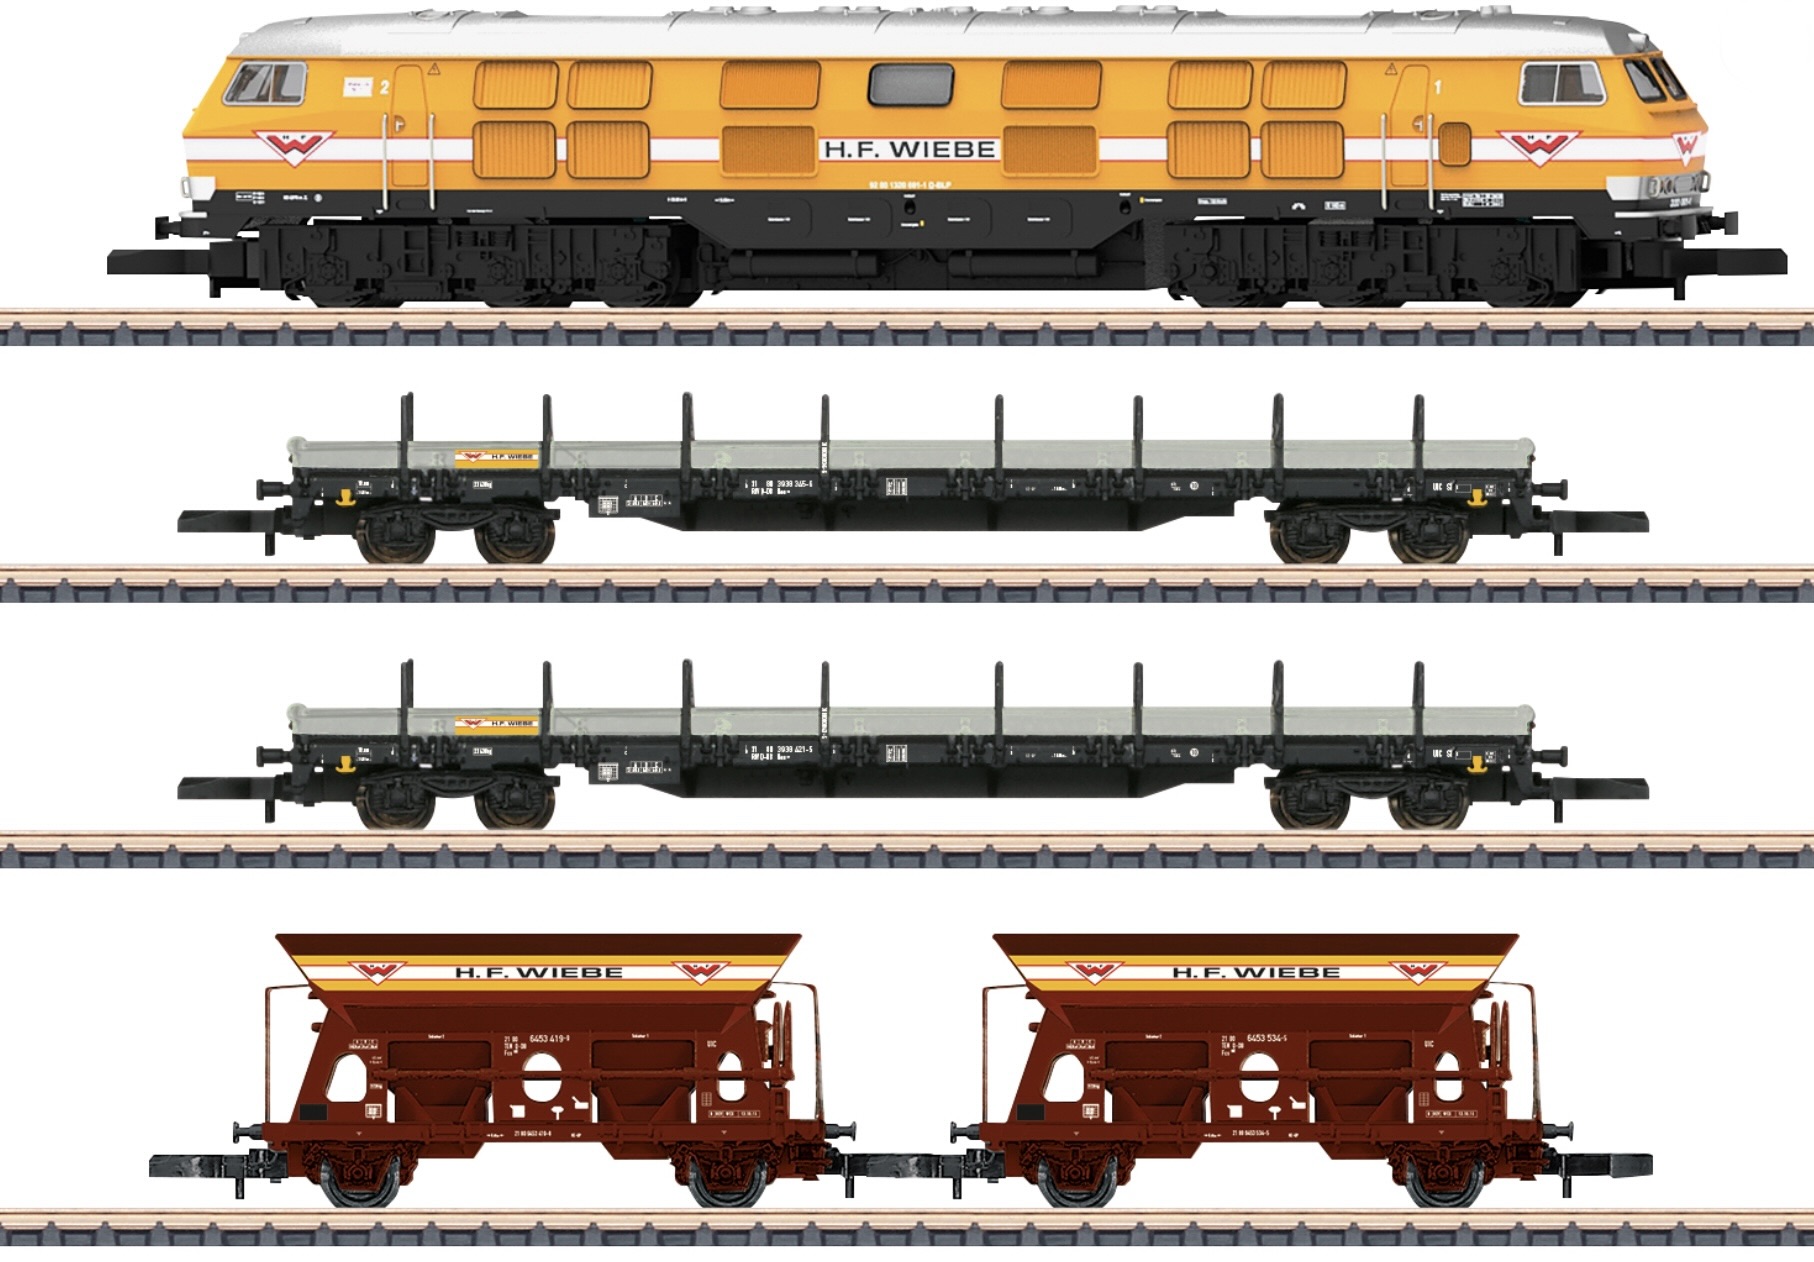 Z Scale - Märklin - 81320 - Freight Train, Diesel, Type V320, Epoch VI - HF Wiebe - 5-Pack